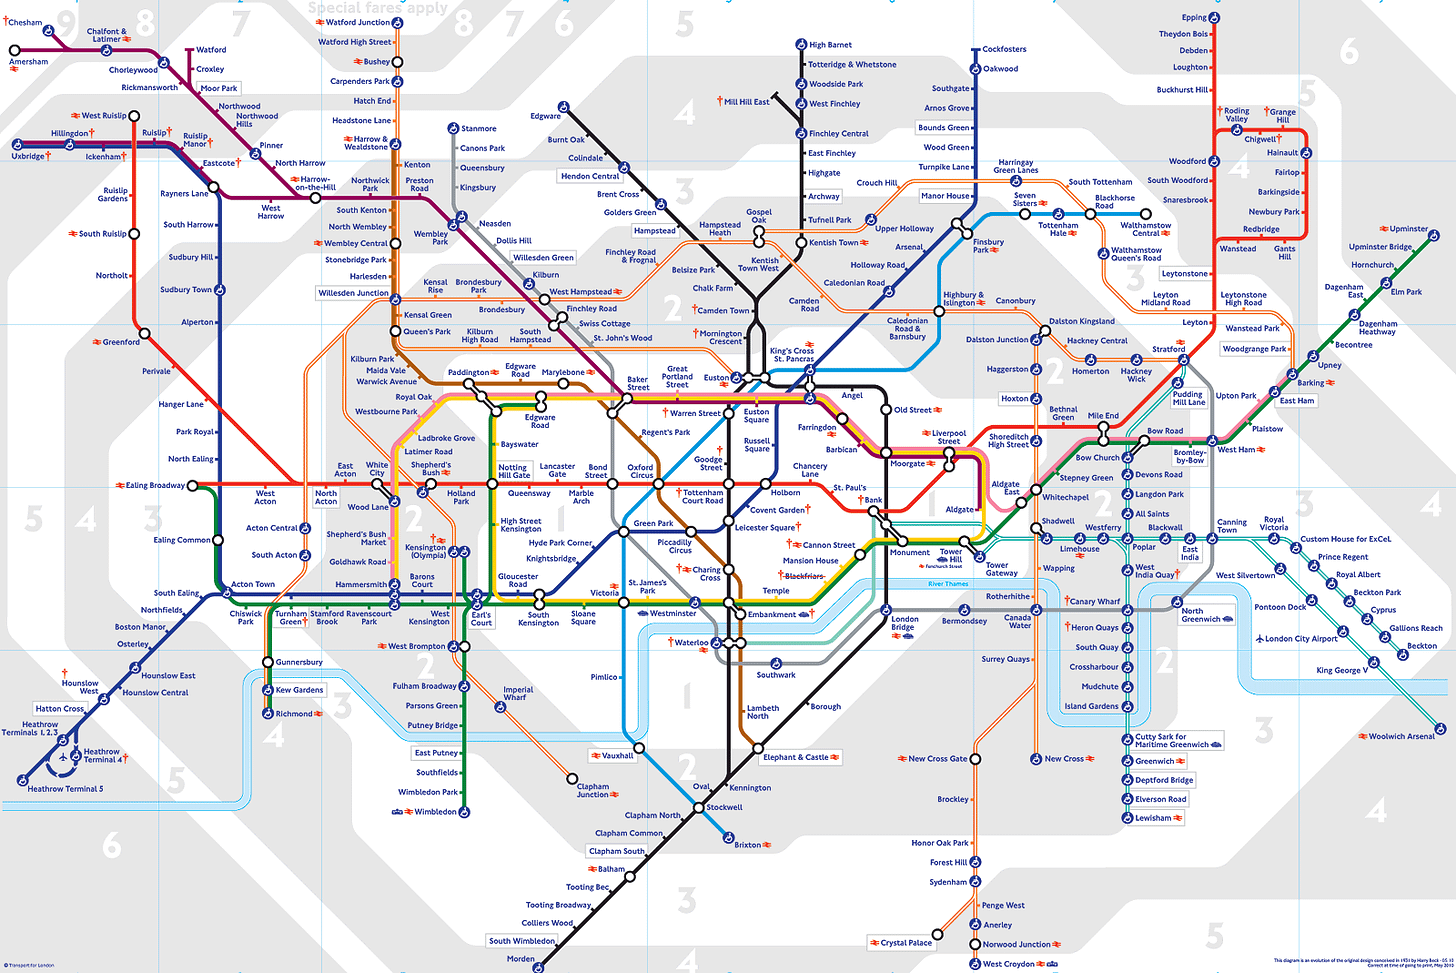 BBC - London - Travel - London Underground Map